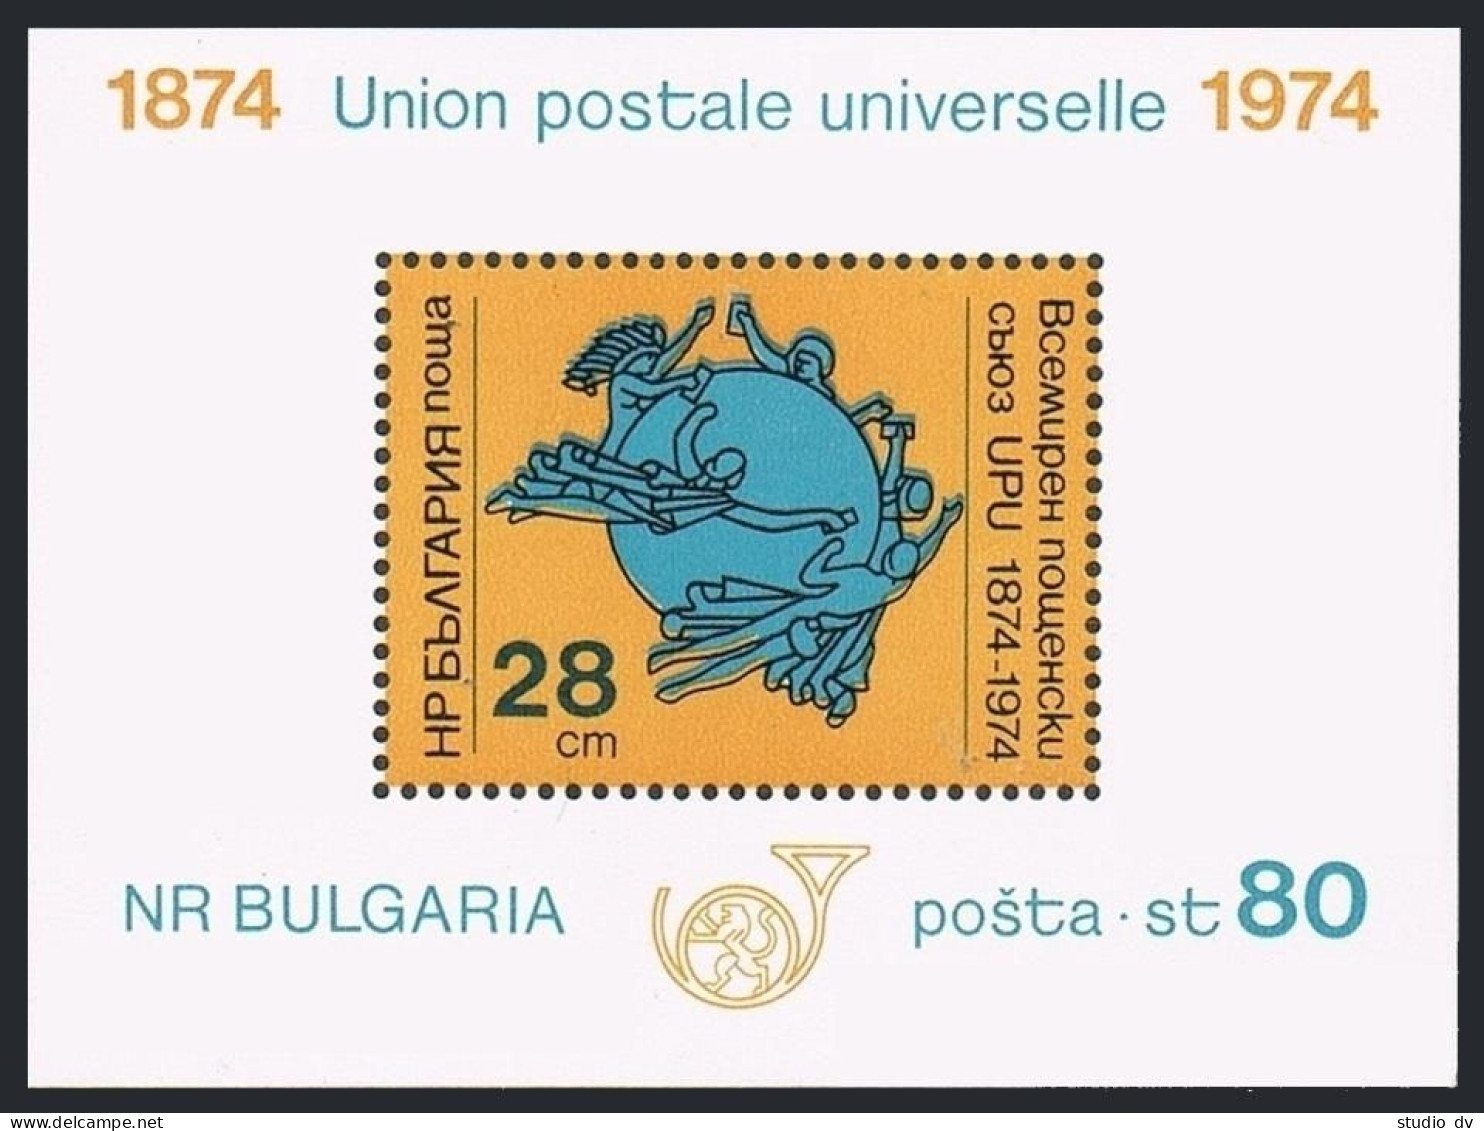 Bulgaria 2193-2194,2195, MNH. Mi 2362-2363,Bl.52. UPU-100:Post Rider,Mail Coach - Ungebraucht